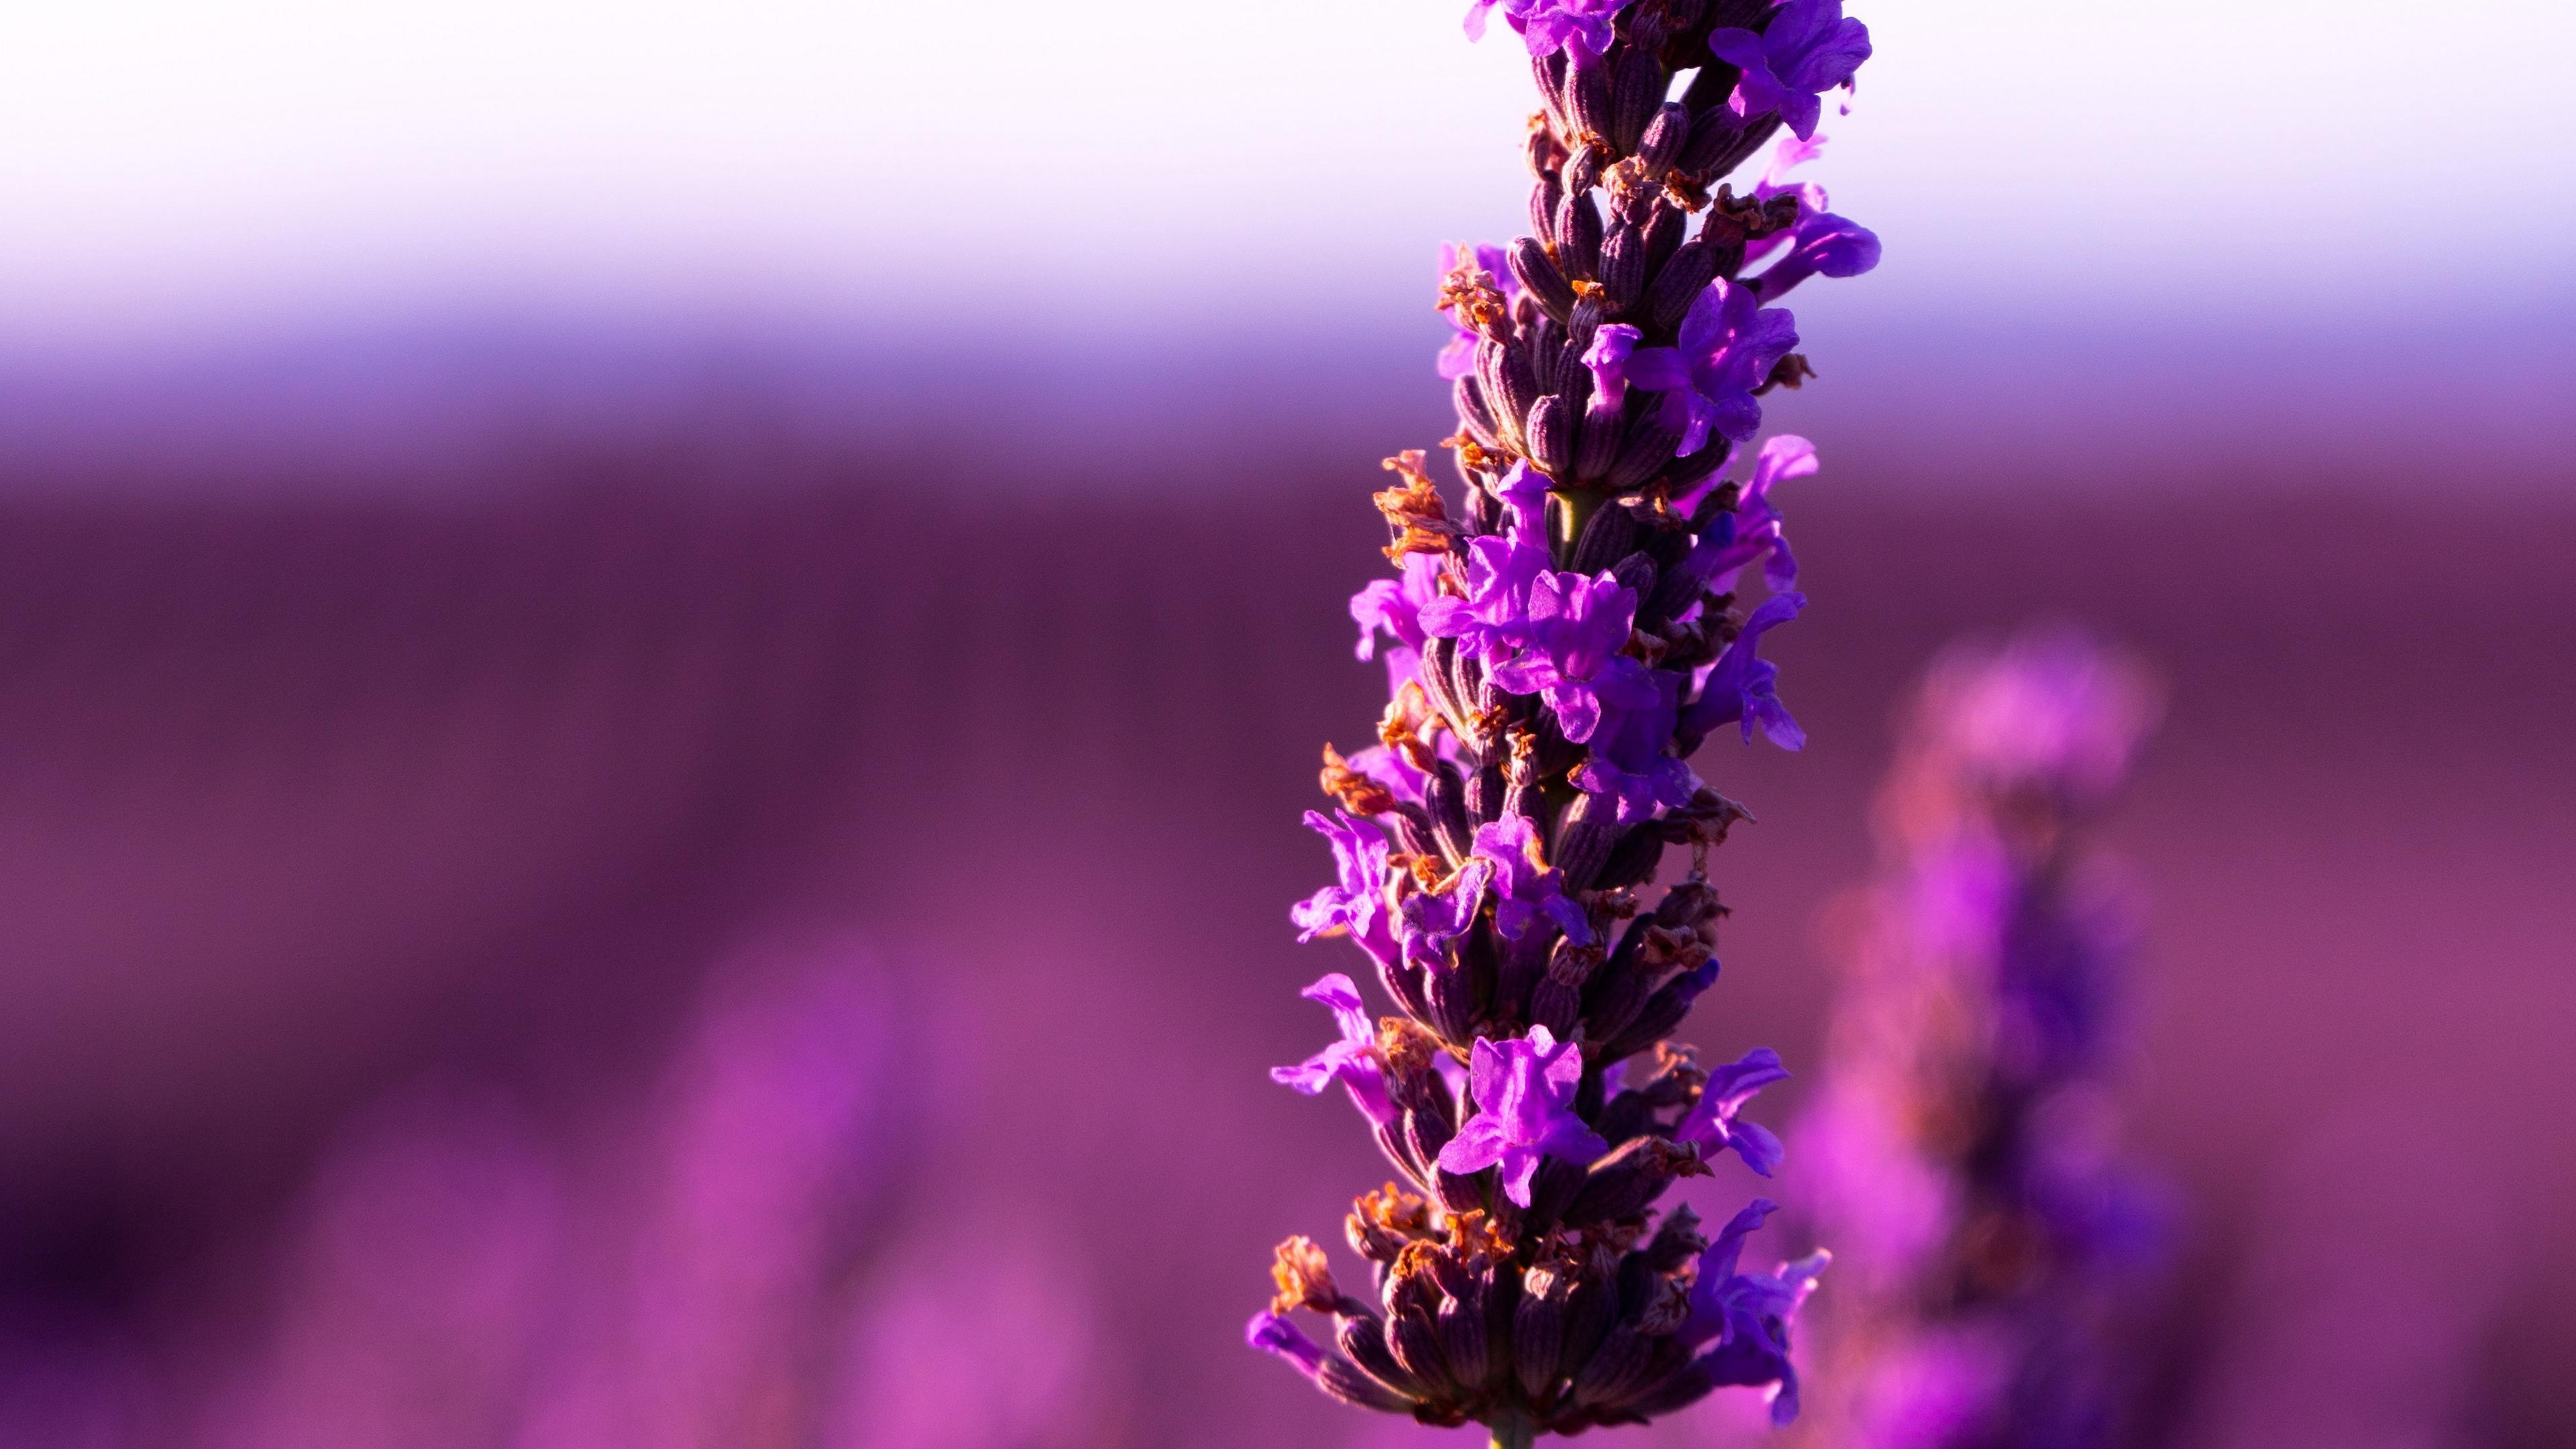 Download wallpaper 3840x2160 lavender, flower, purple